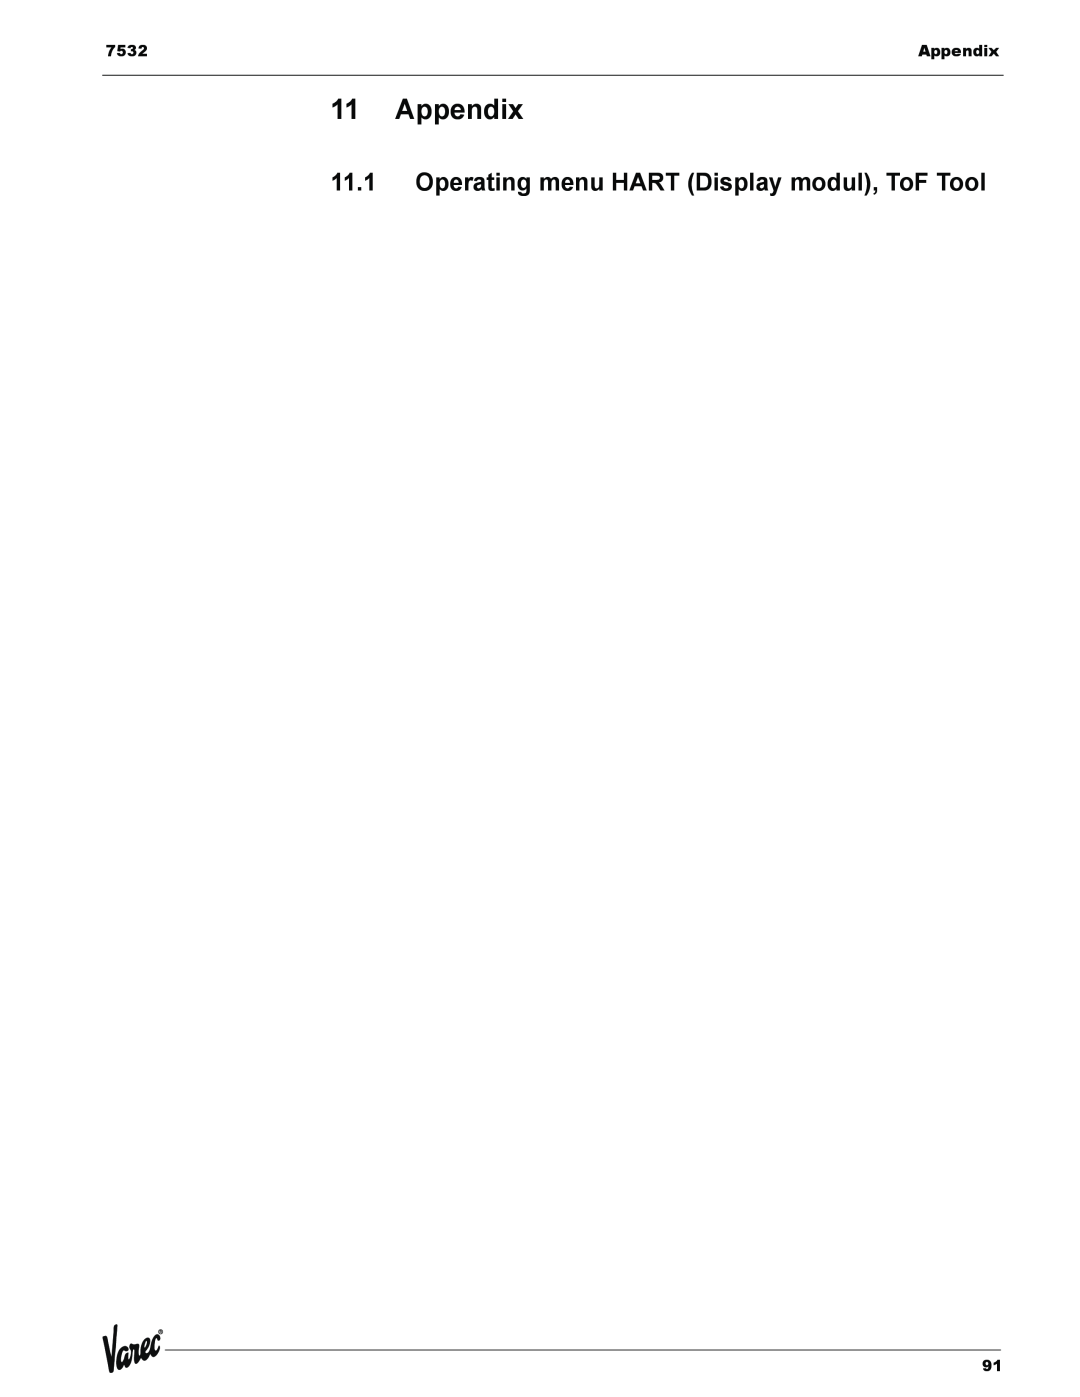 Lightning Audio 7532 manual Appendix, 11.1Operating menu HART Display modul, ToF Tool 